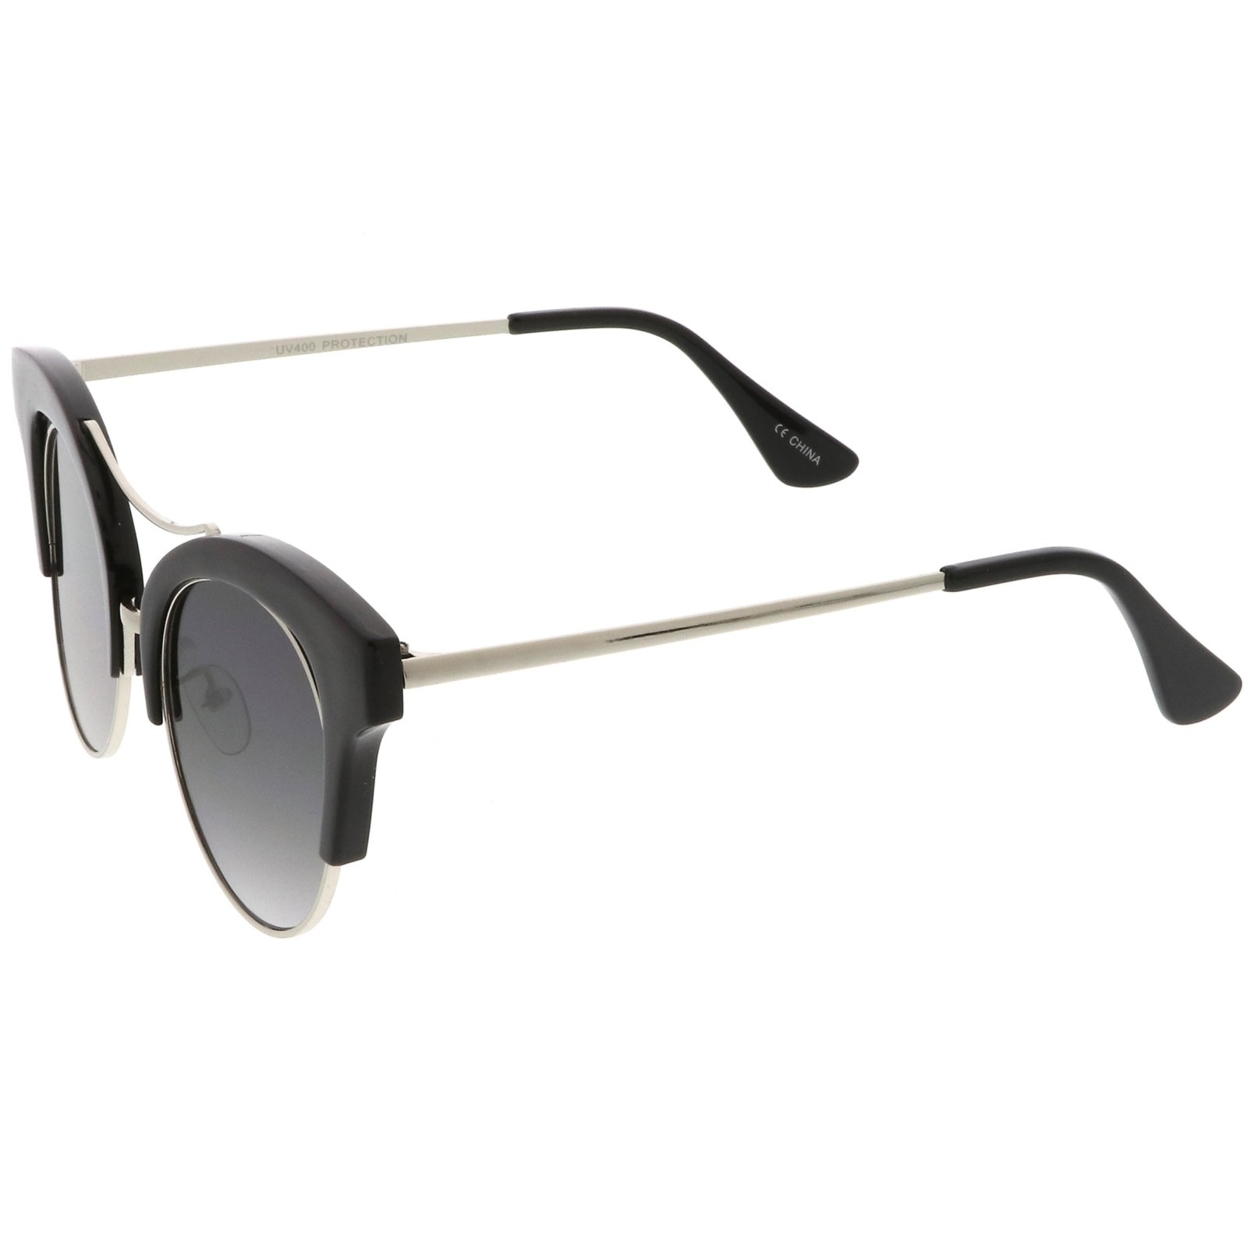 Women's Oversize Cutout Metal Brow Bar Round Flat Lens Cat Eye Sunglasses 51mm - Black-Gold / Smoke